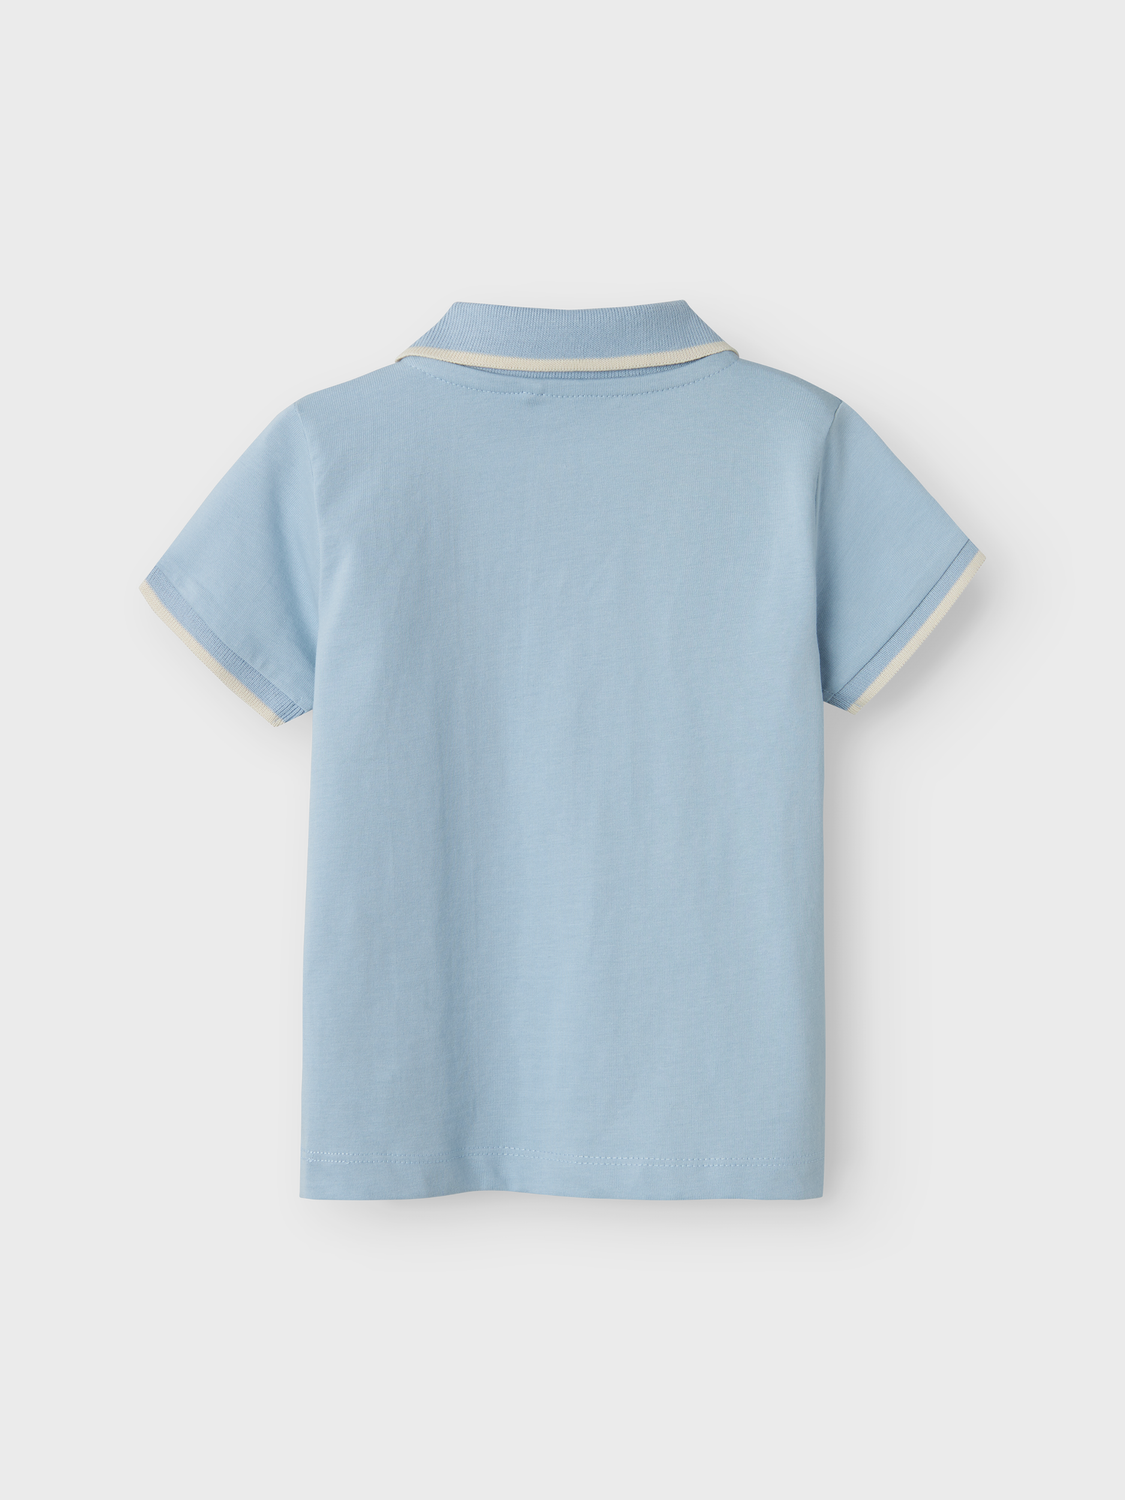 NMMFUMME T-Shirts & Tops - Chambray Blue